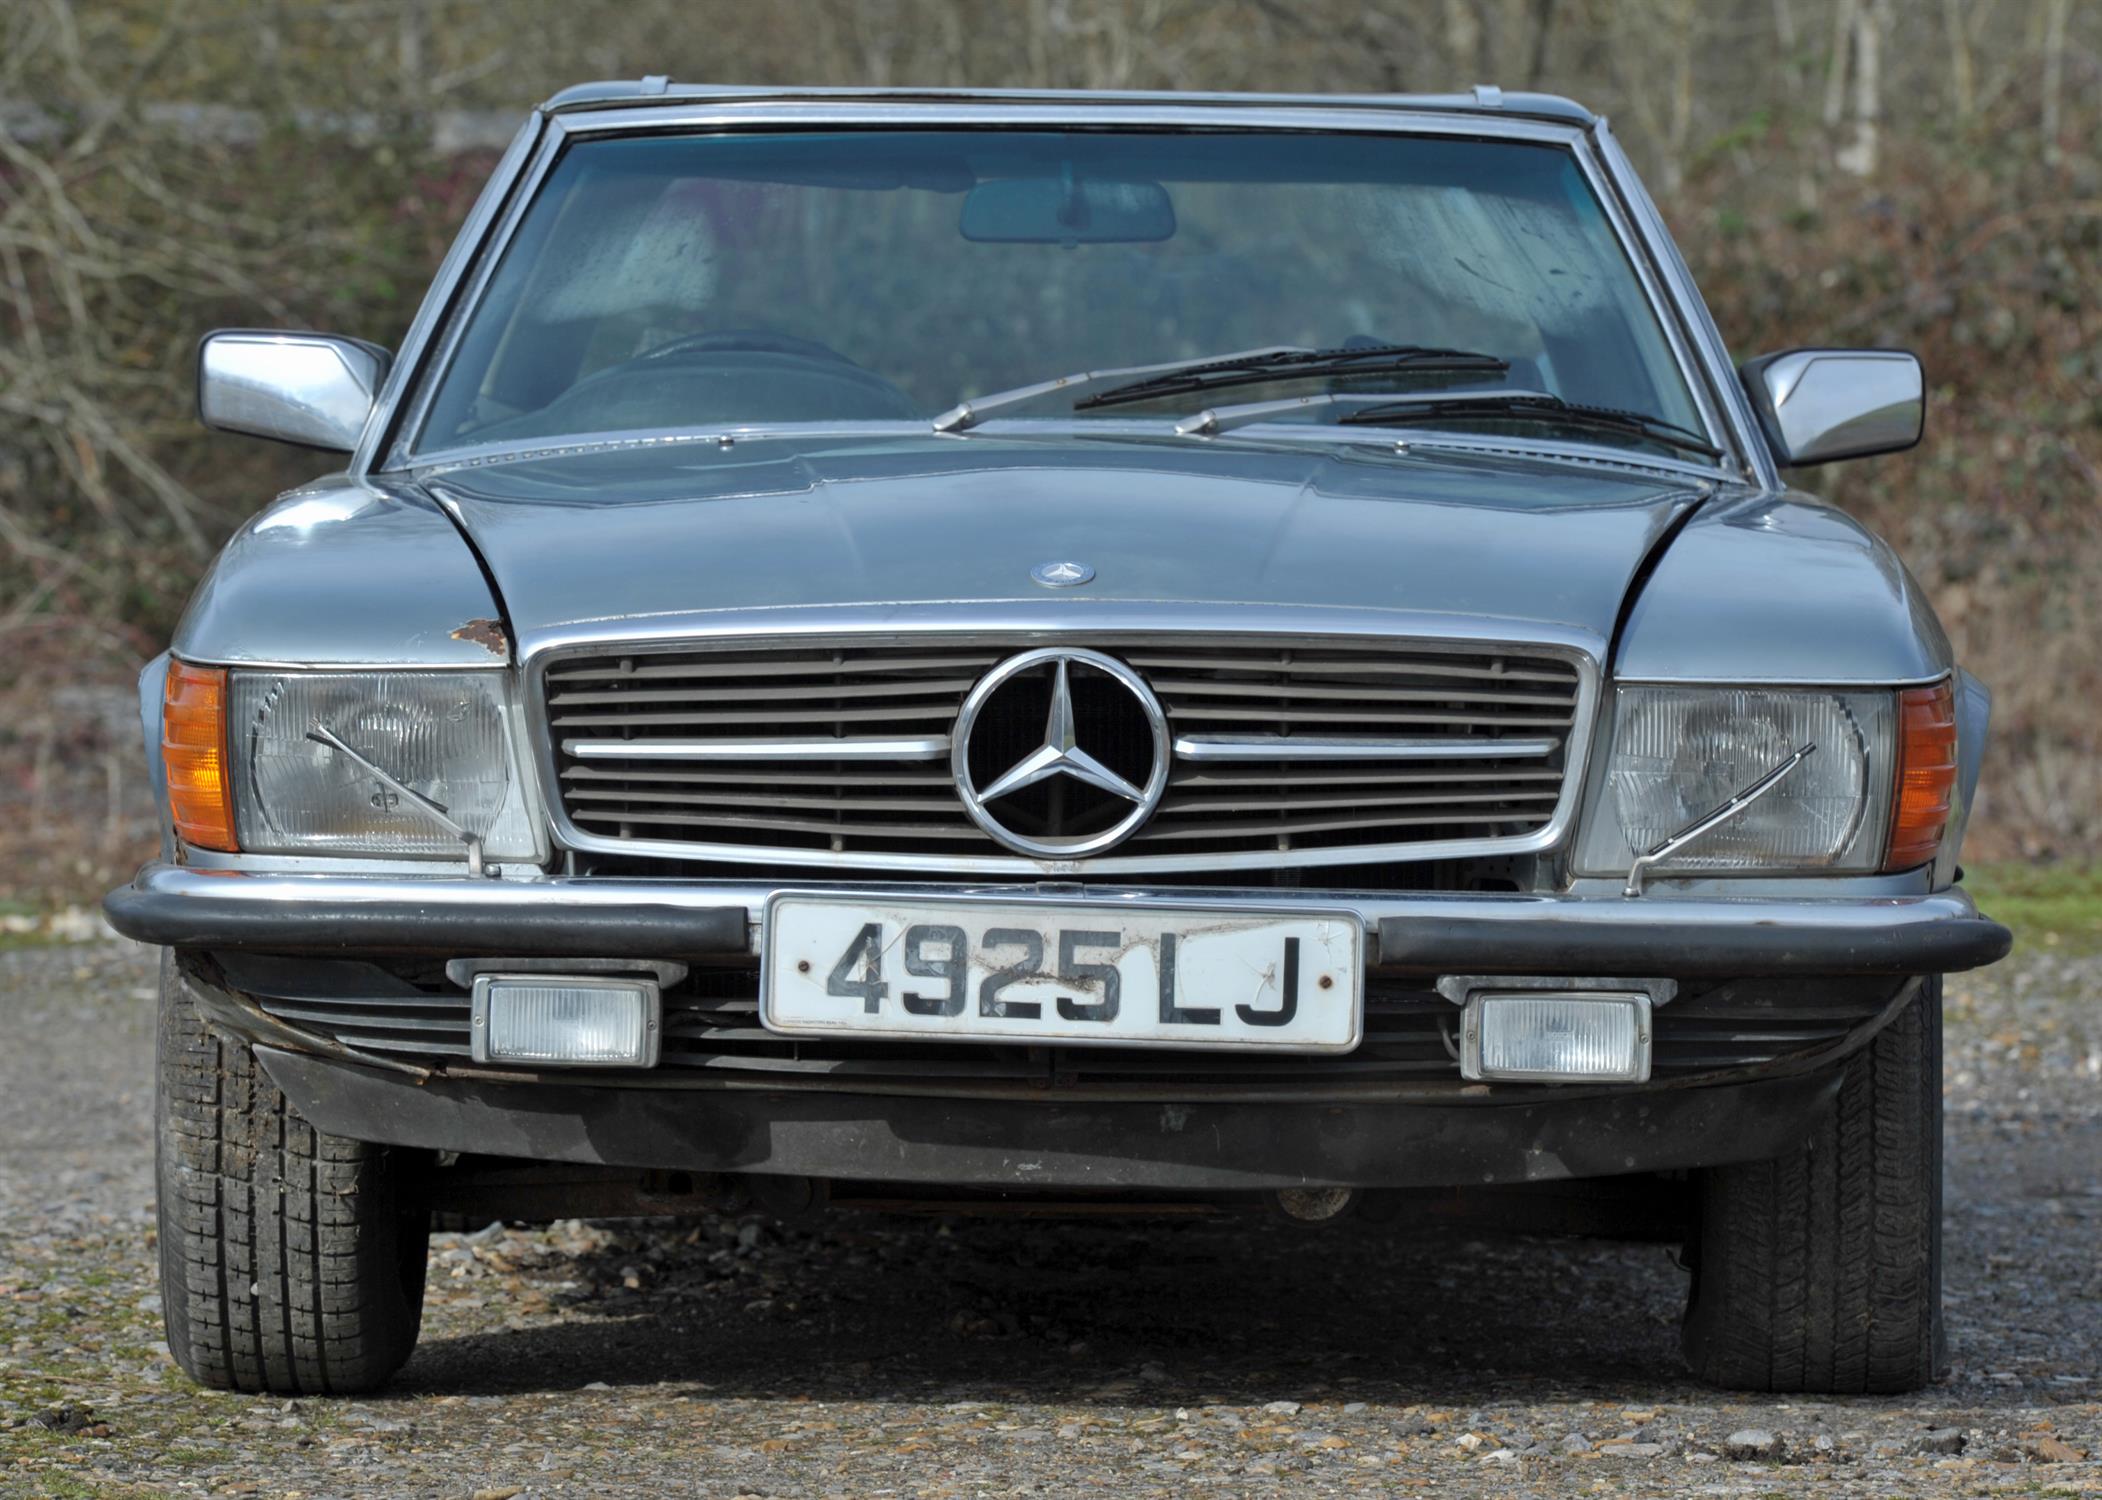 1981 Mercedes 380 SL R107 Automatic Petrol Convertible. Registration number: 4925 LJ. - Image 2 of 14